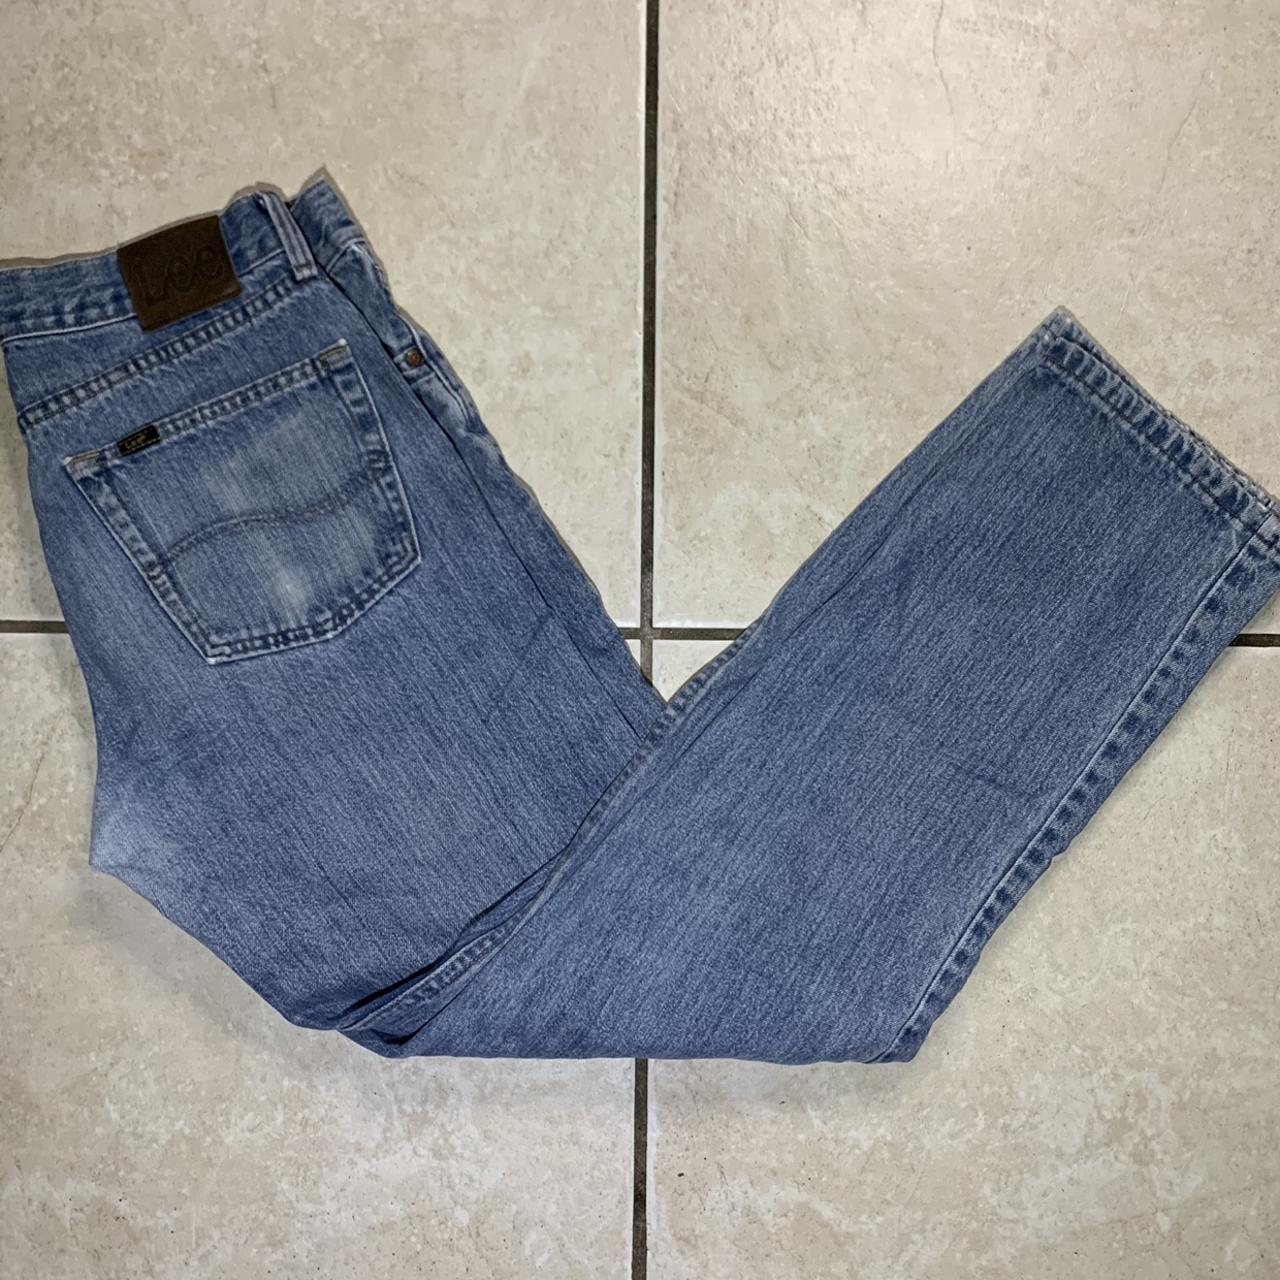 Vintage washed Lee Jeans 🔥 Size 32 x 32 Condition... - Depop